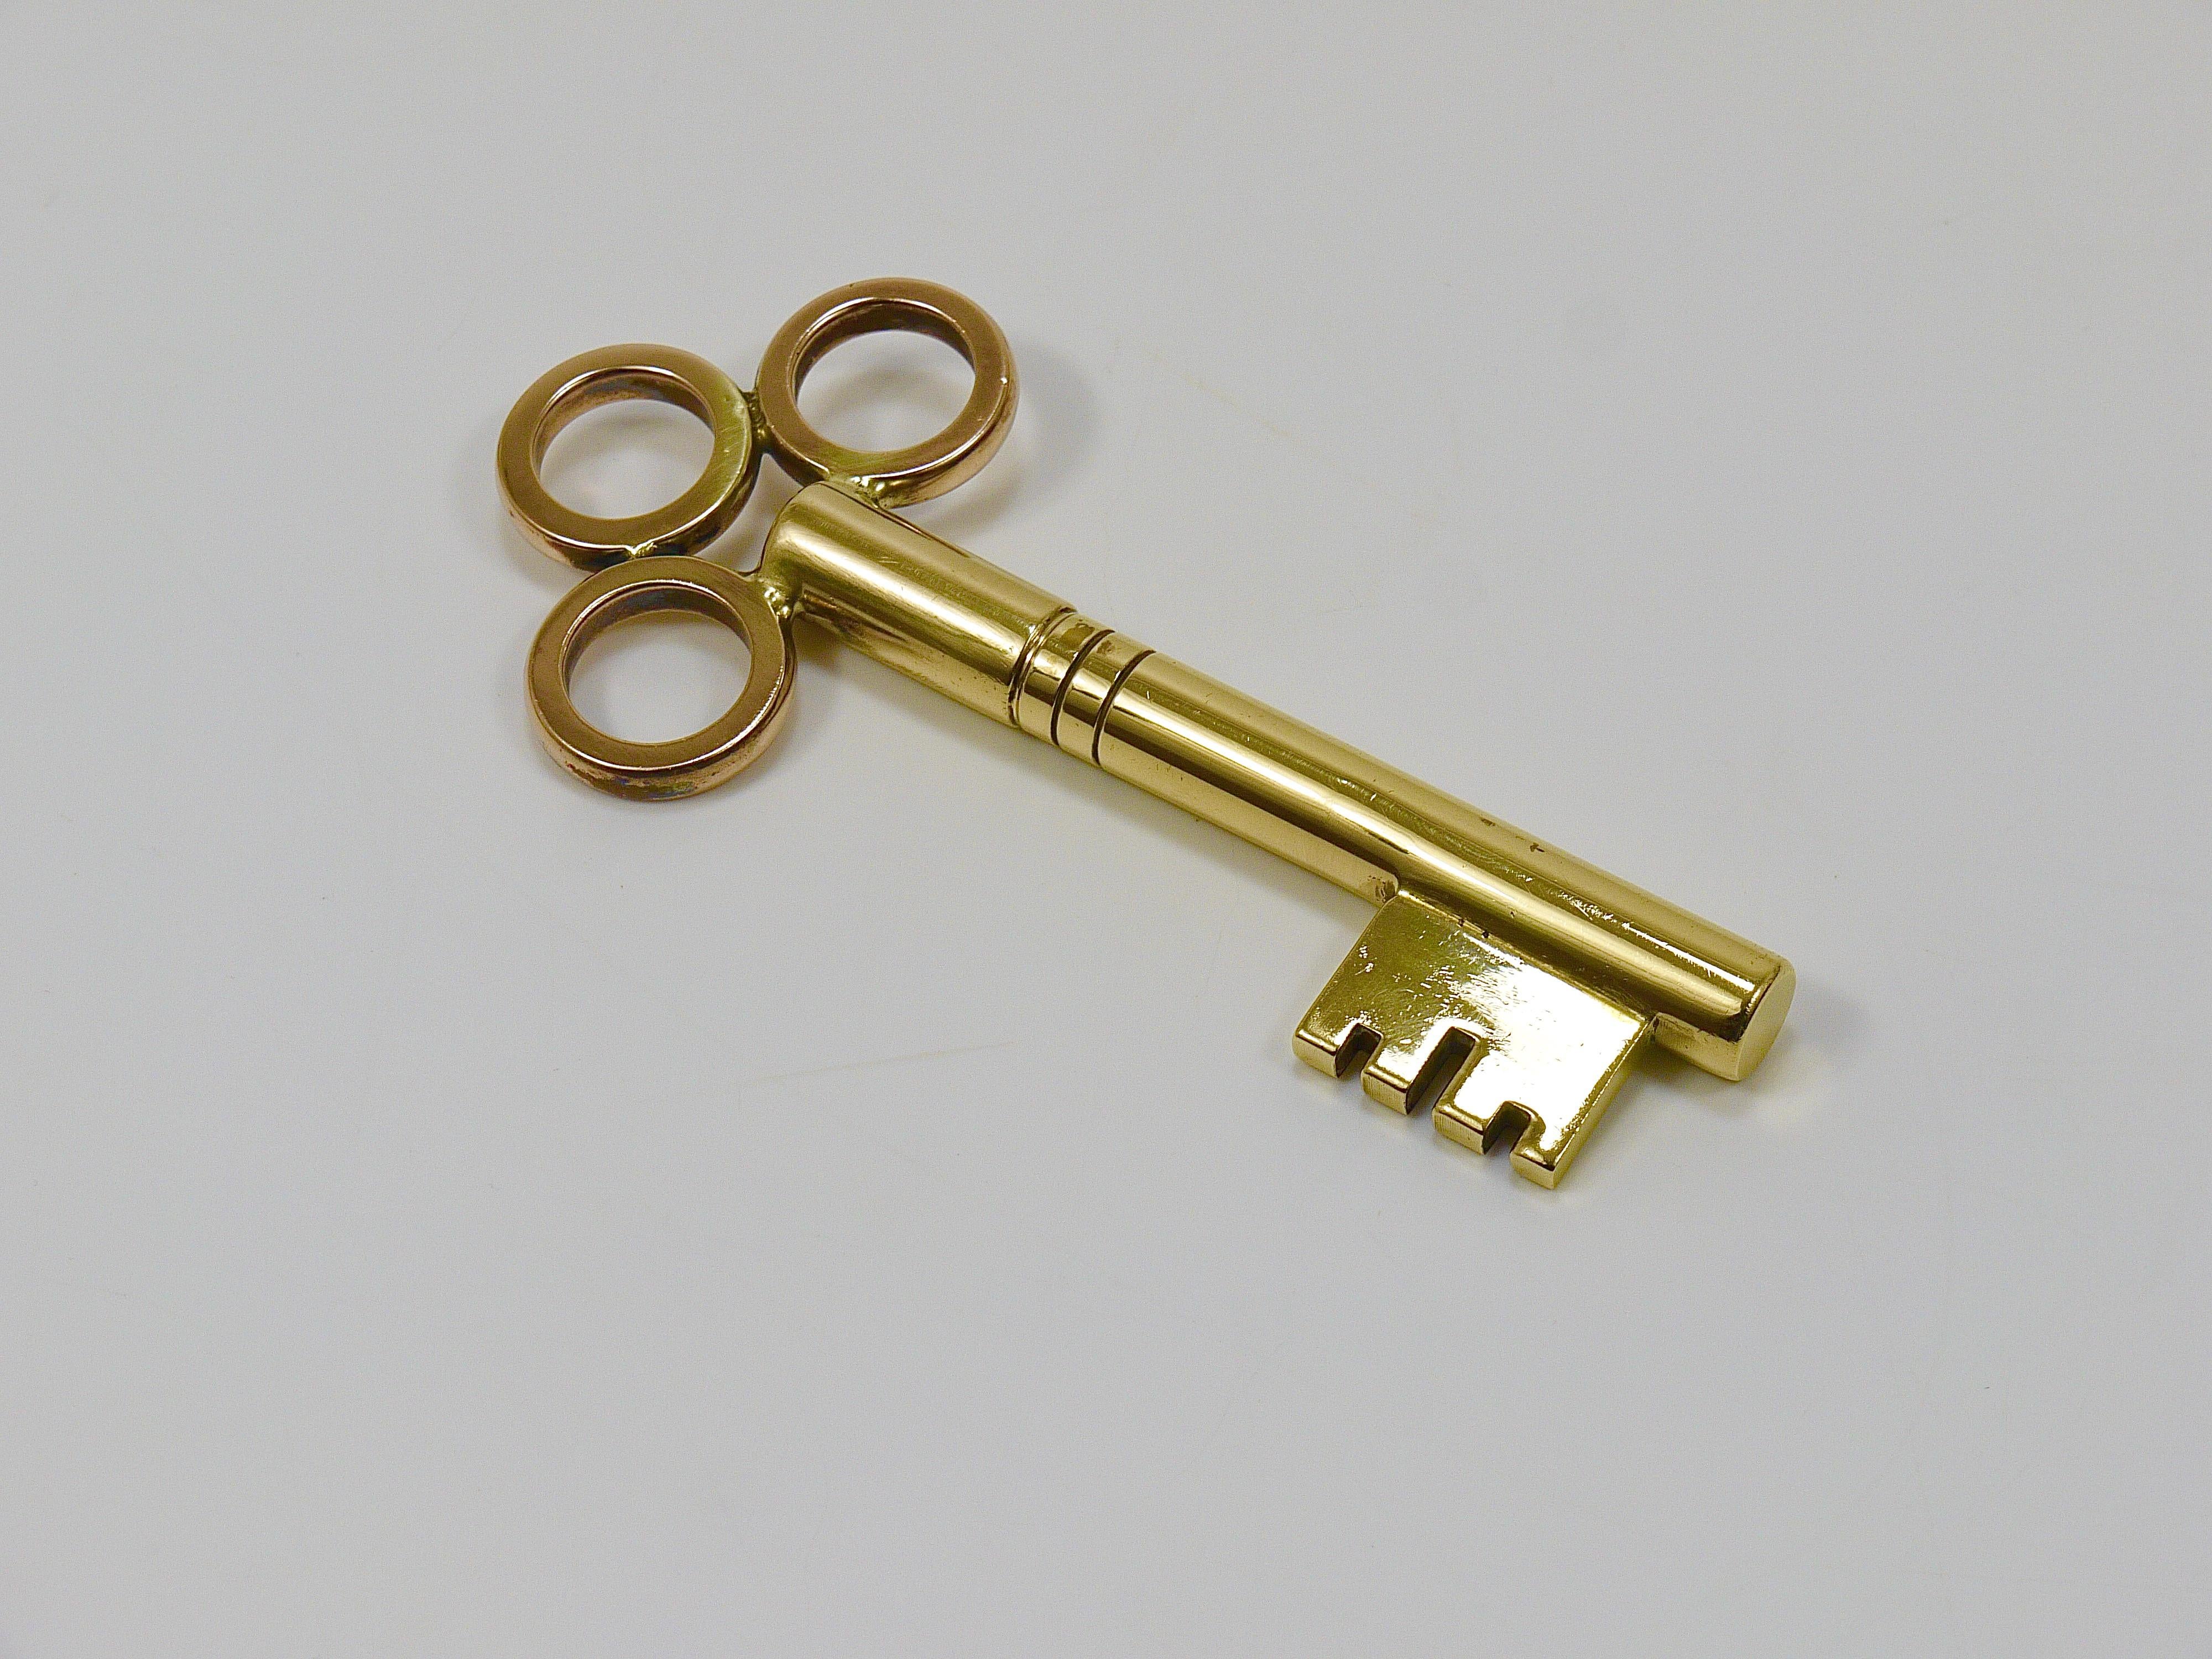 Large Carl Aubock Brass Key Corkscrew Bottle Opener Paperweight, Austria, 1950s For Sale 5